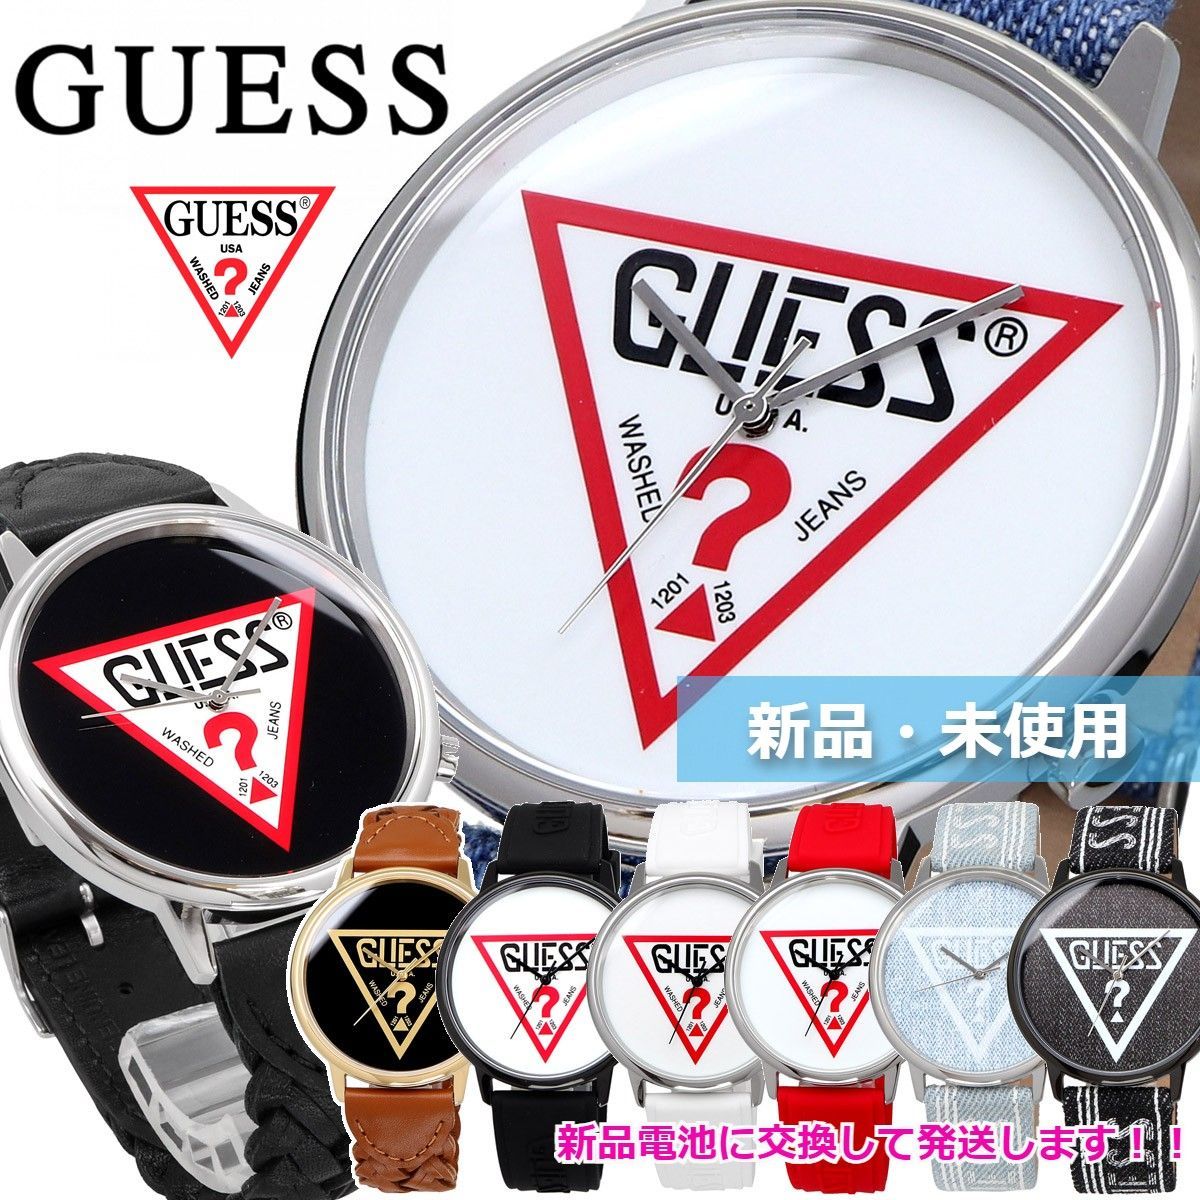 GUESS ゲス 腕時計 おしゃれ 人気 メンズ guess1 [並行輸入品] ショップノーススター メルカリ店 メルカリ